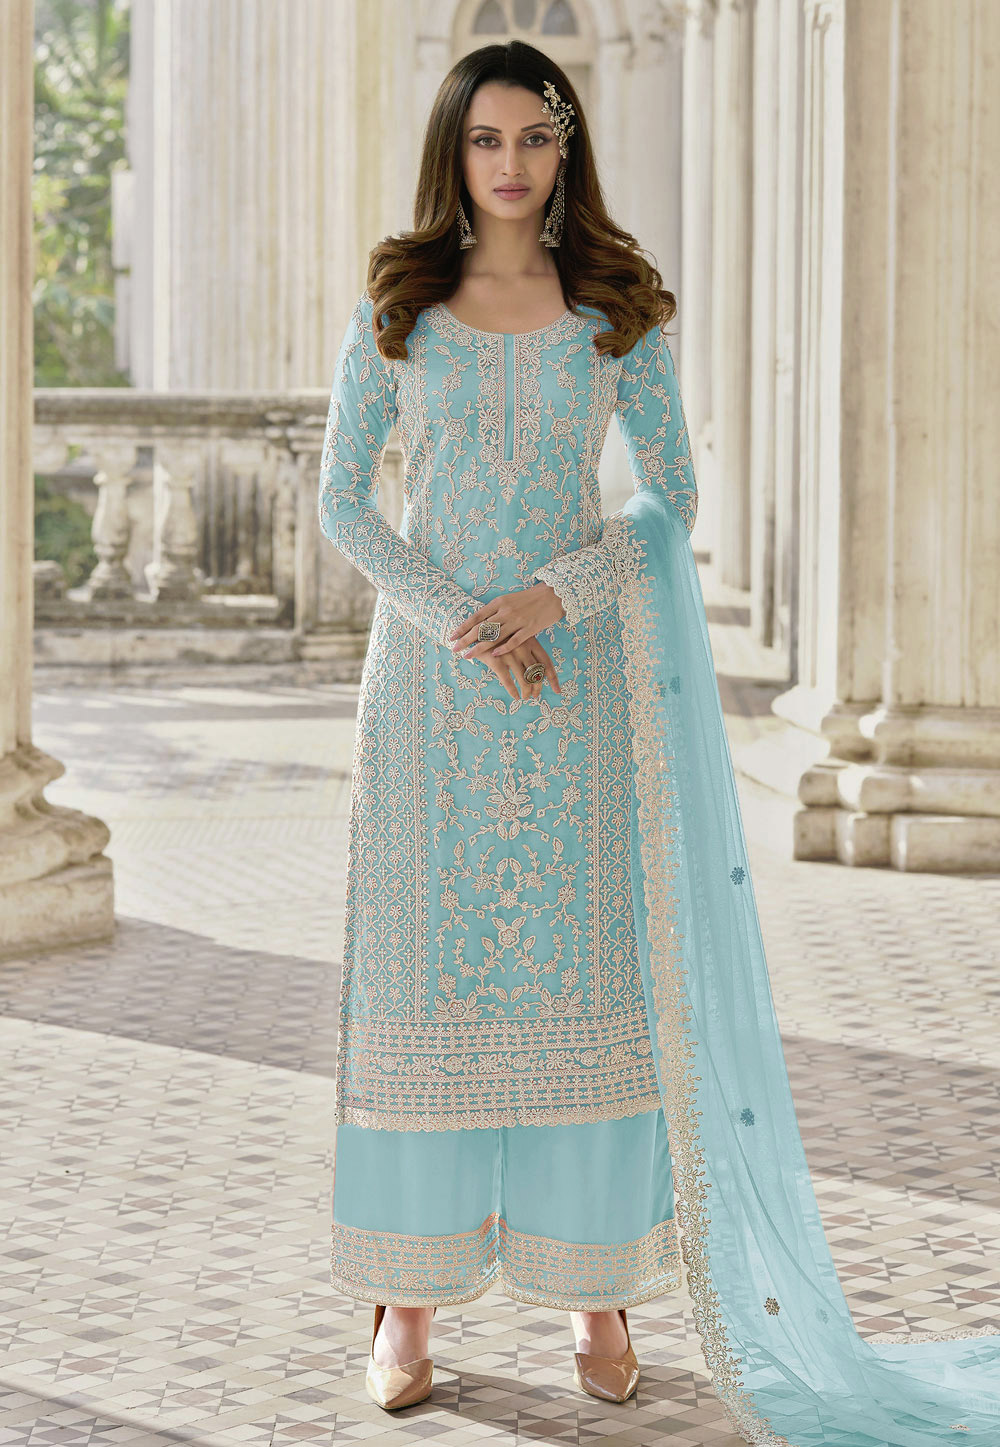 Buy Sky Blue Salwar Kameez Online at Best Price on Indian Cloth Store.